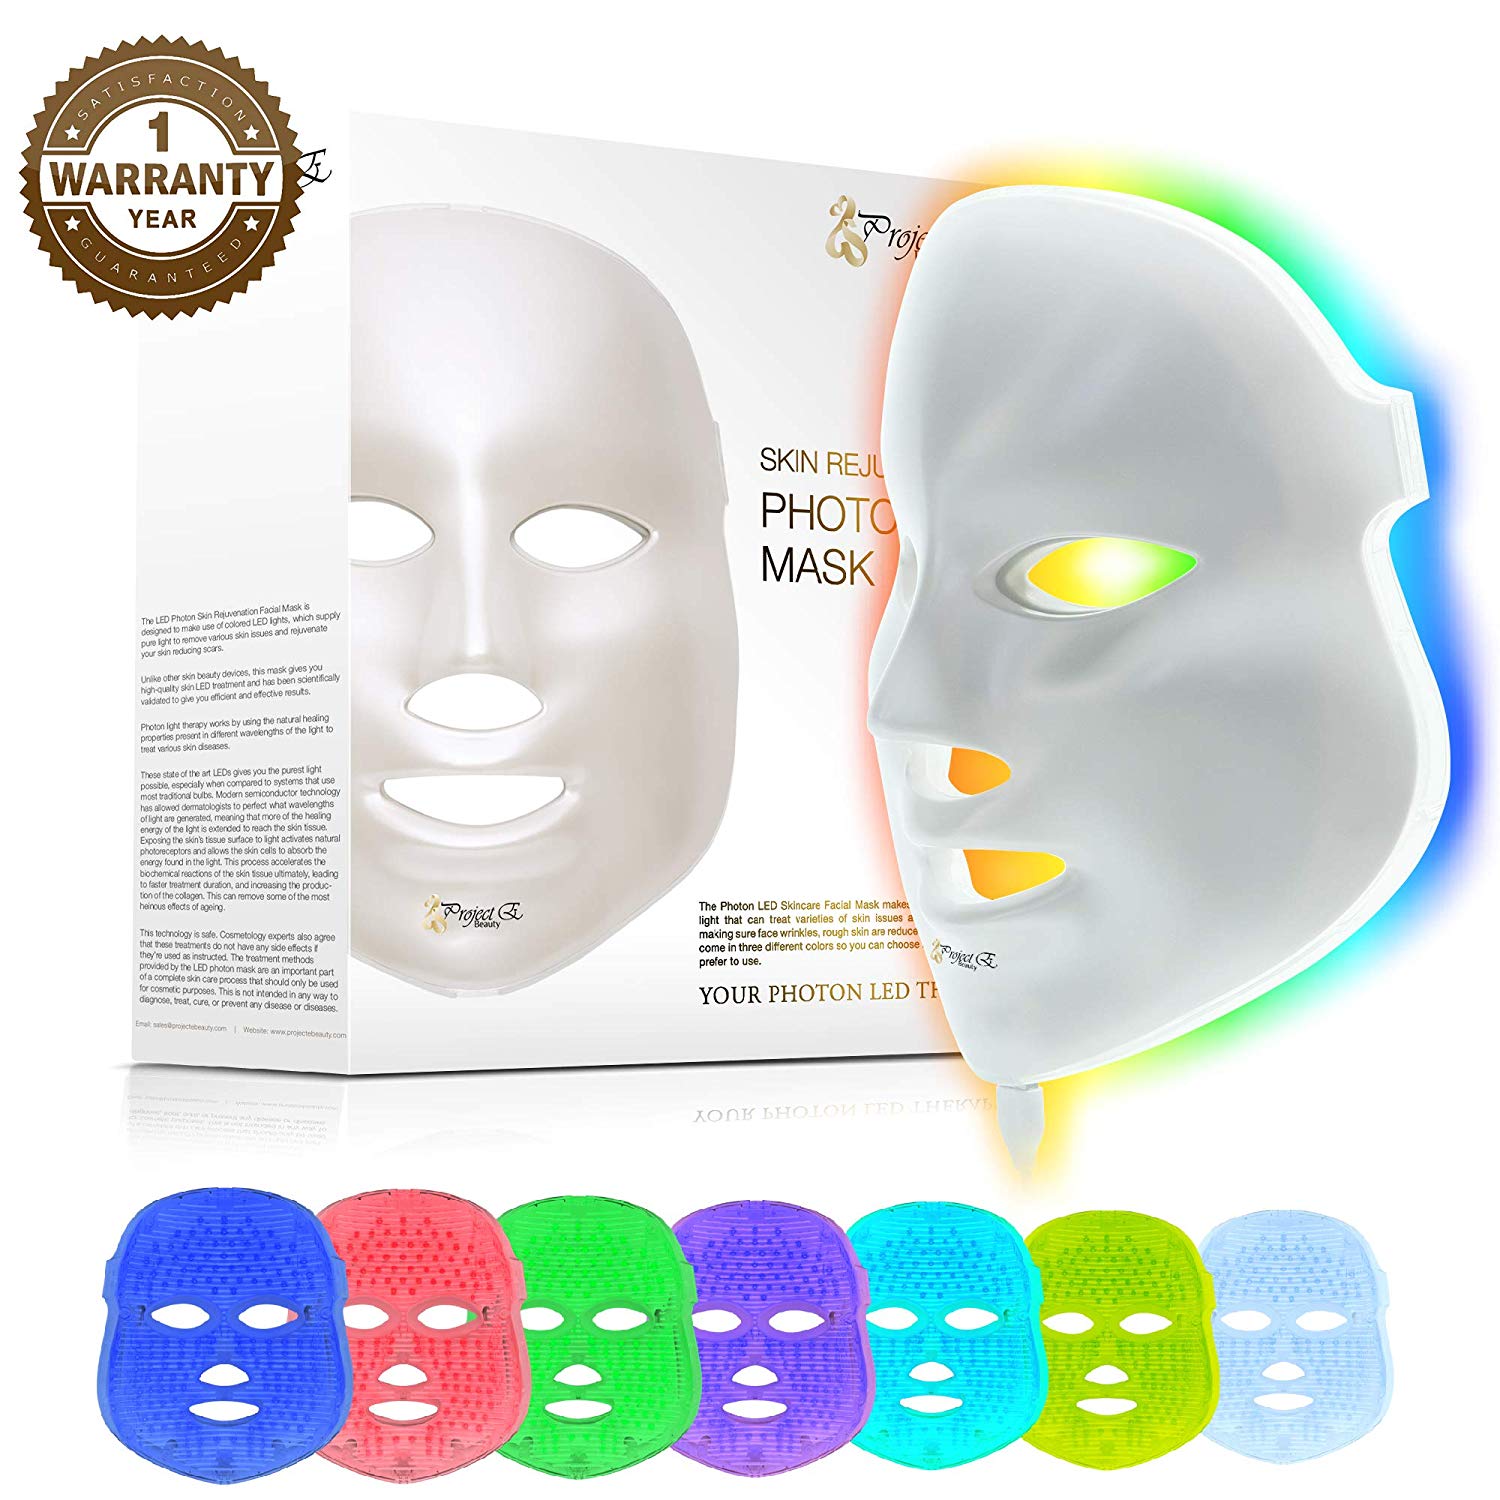 Project E Beauty 7 Color LED Mask Reviews